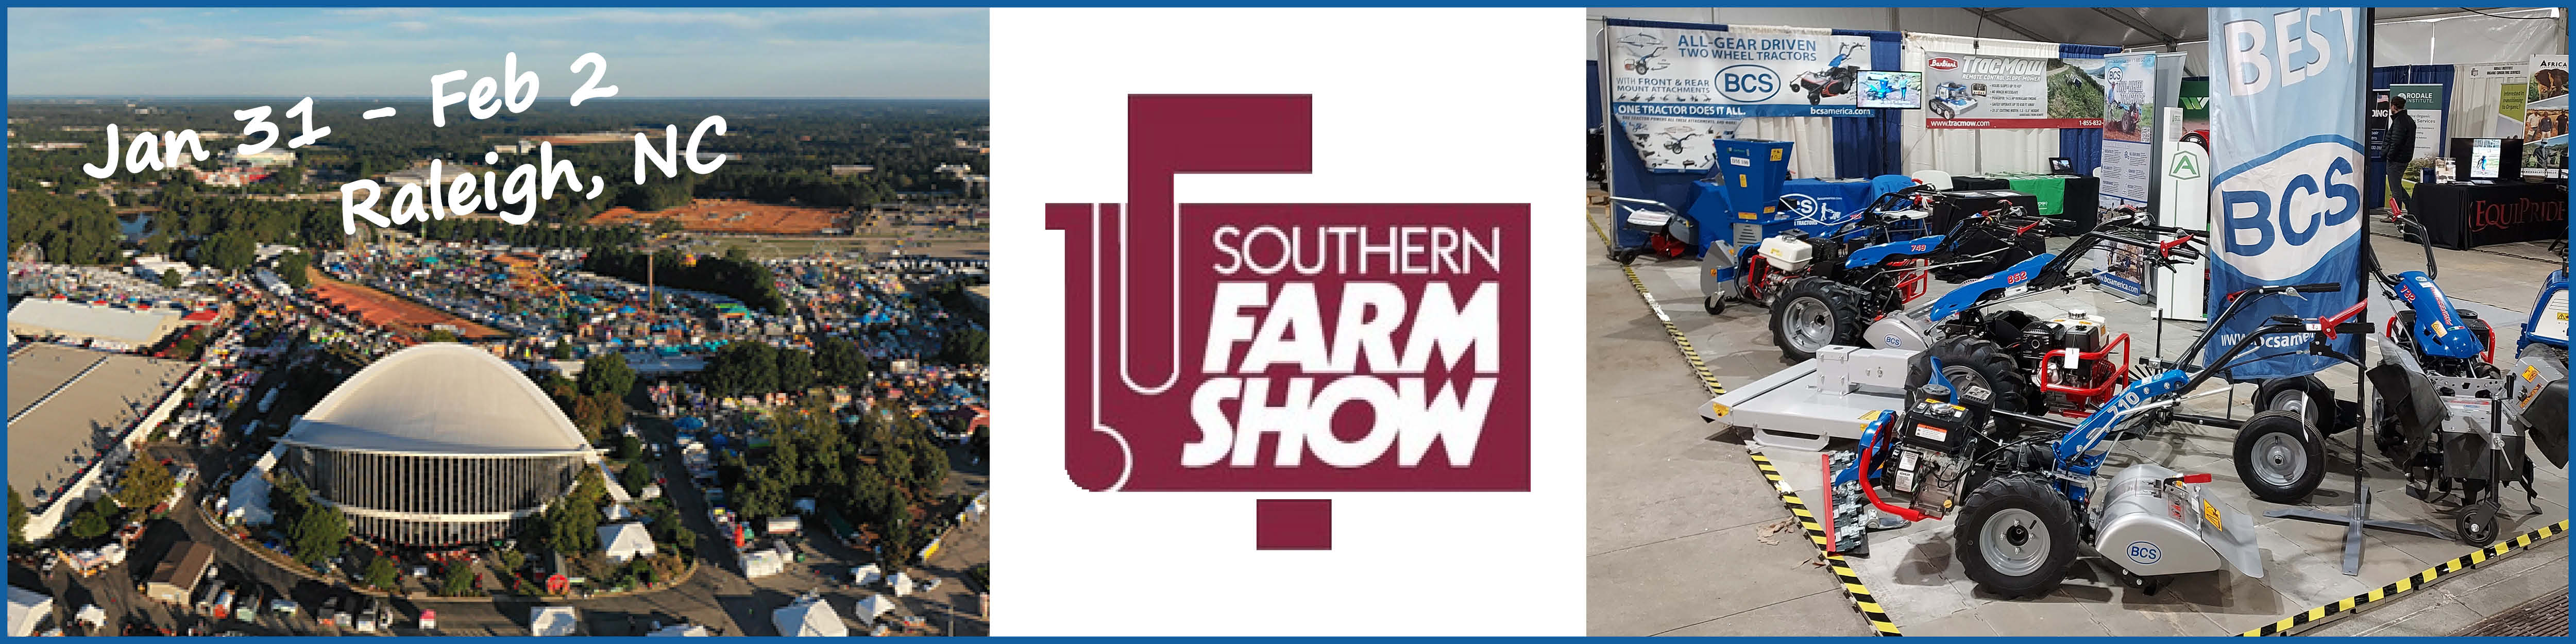 Southern Farm Show - Raleigh, NC